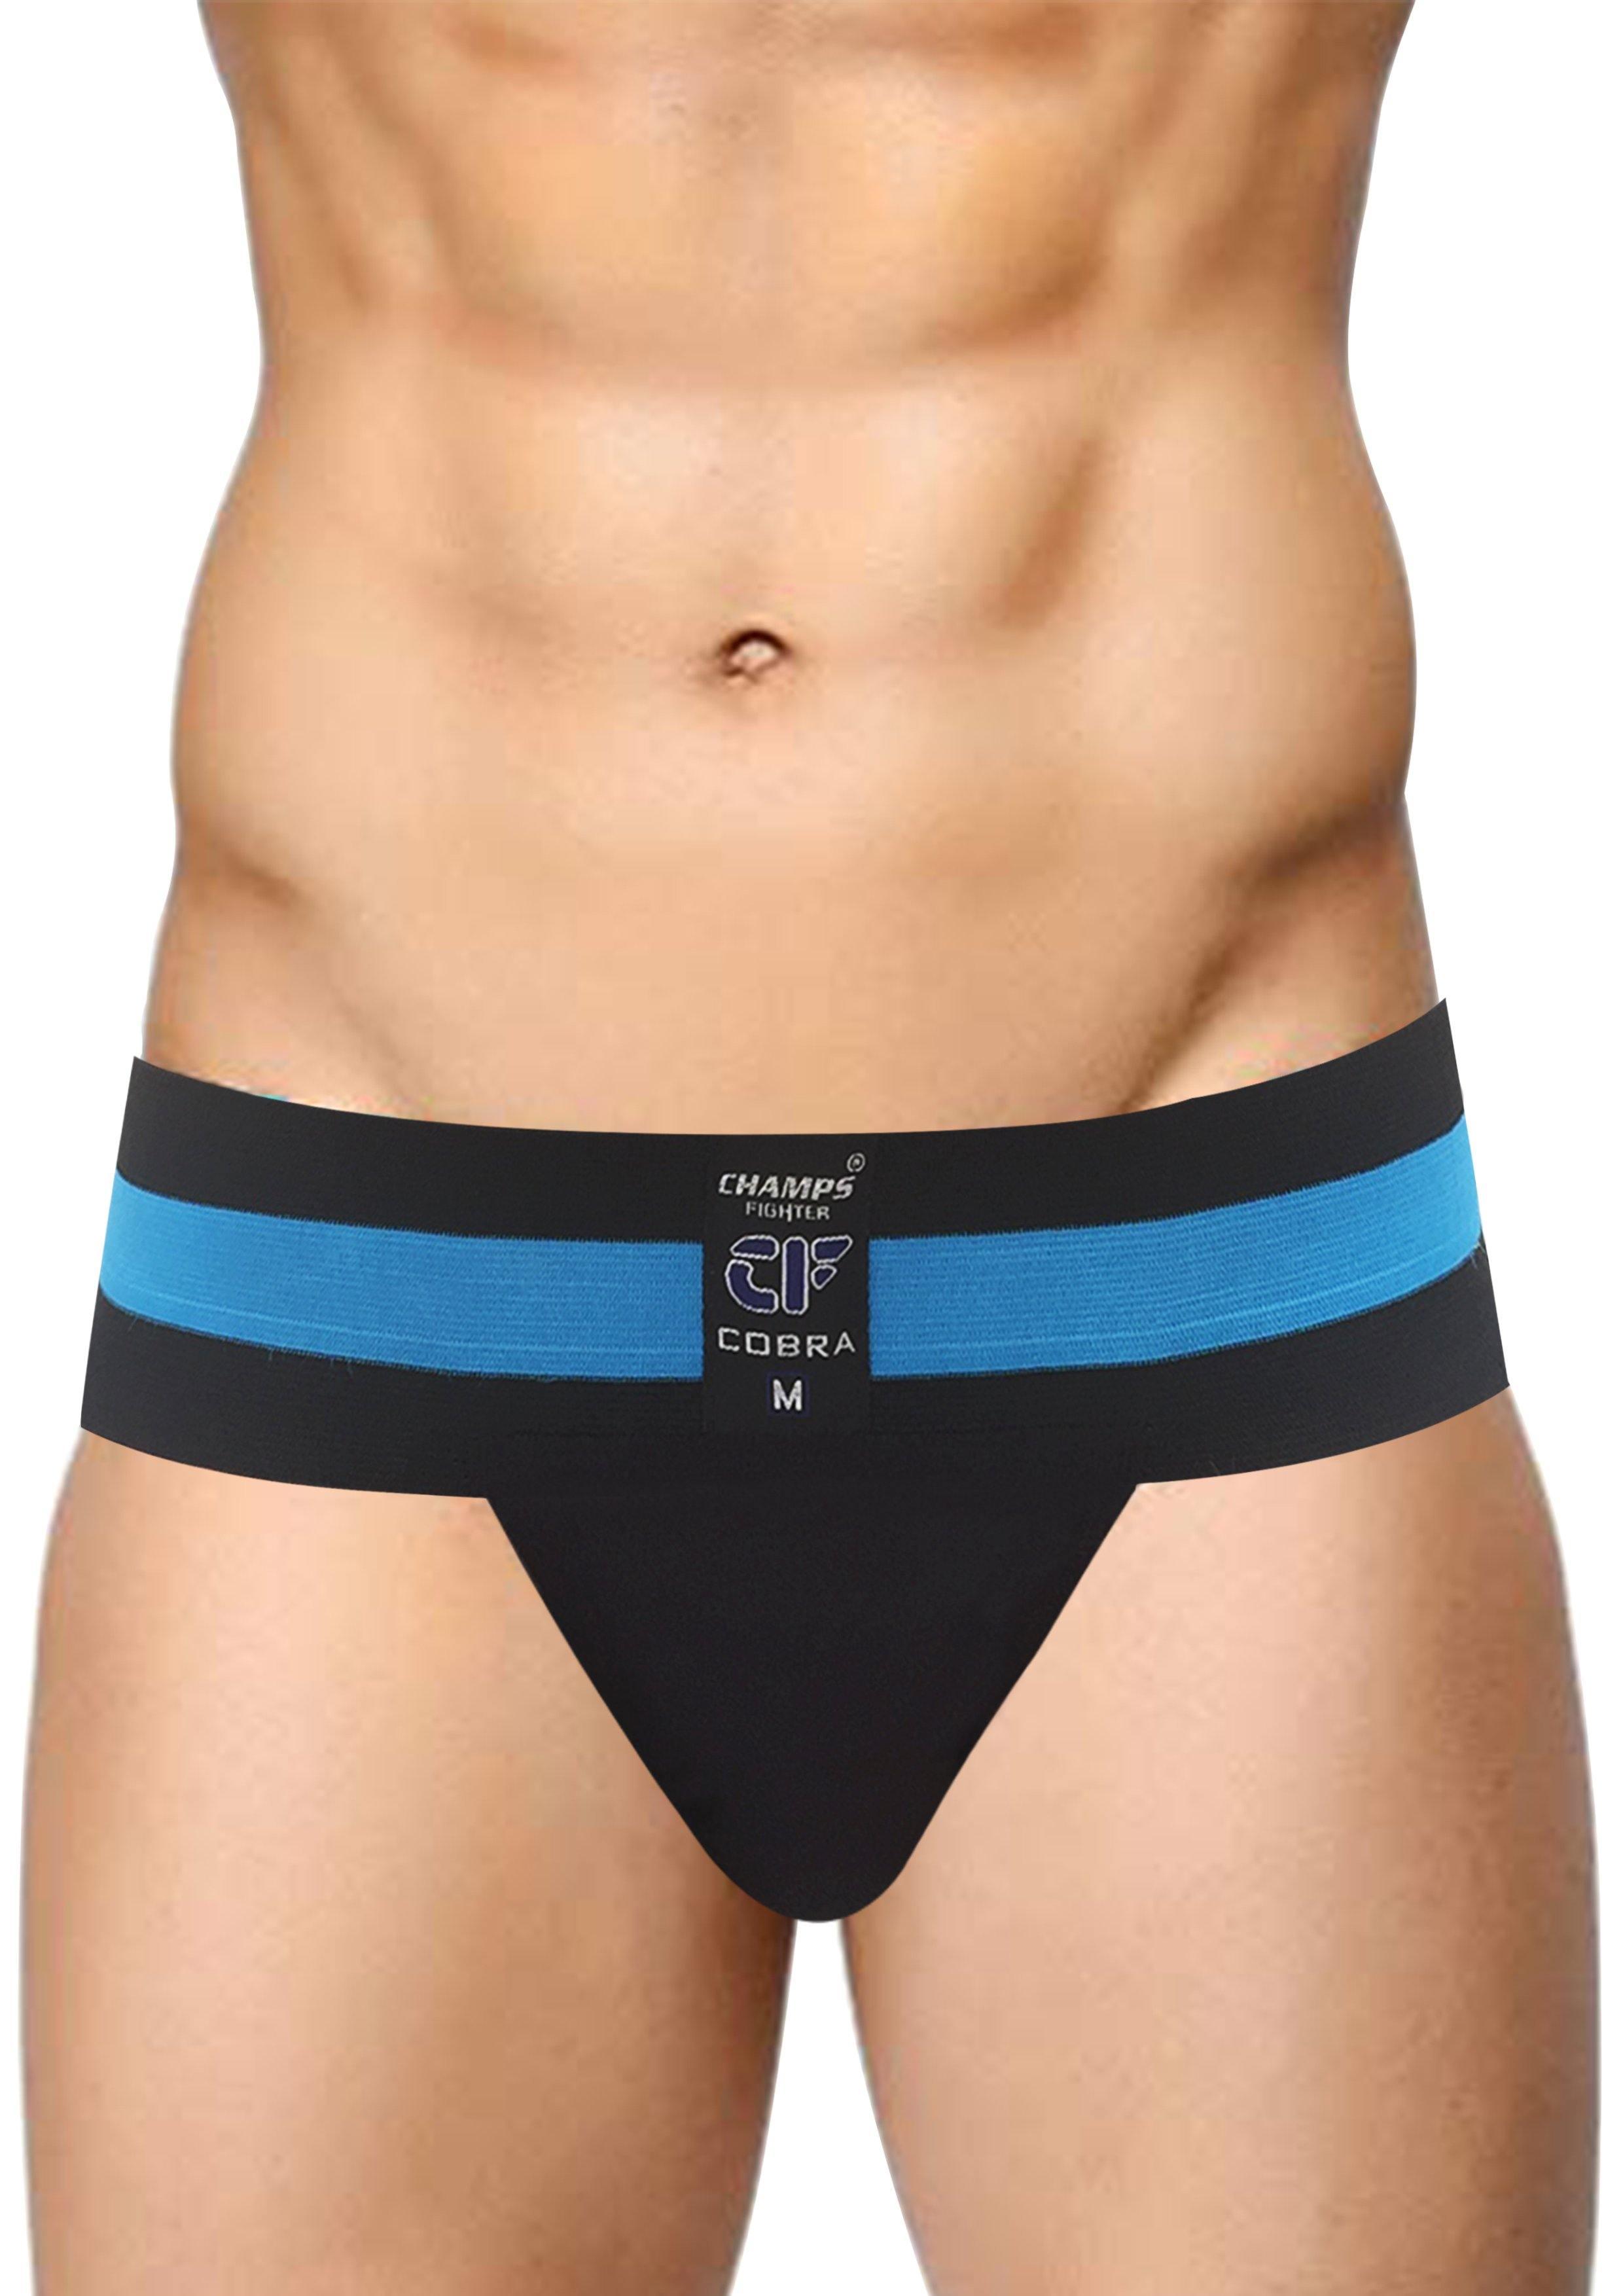 Stay Supported with Men's Gym Underwear: Maximum Comfort – Designer mart